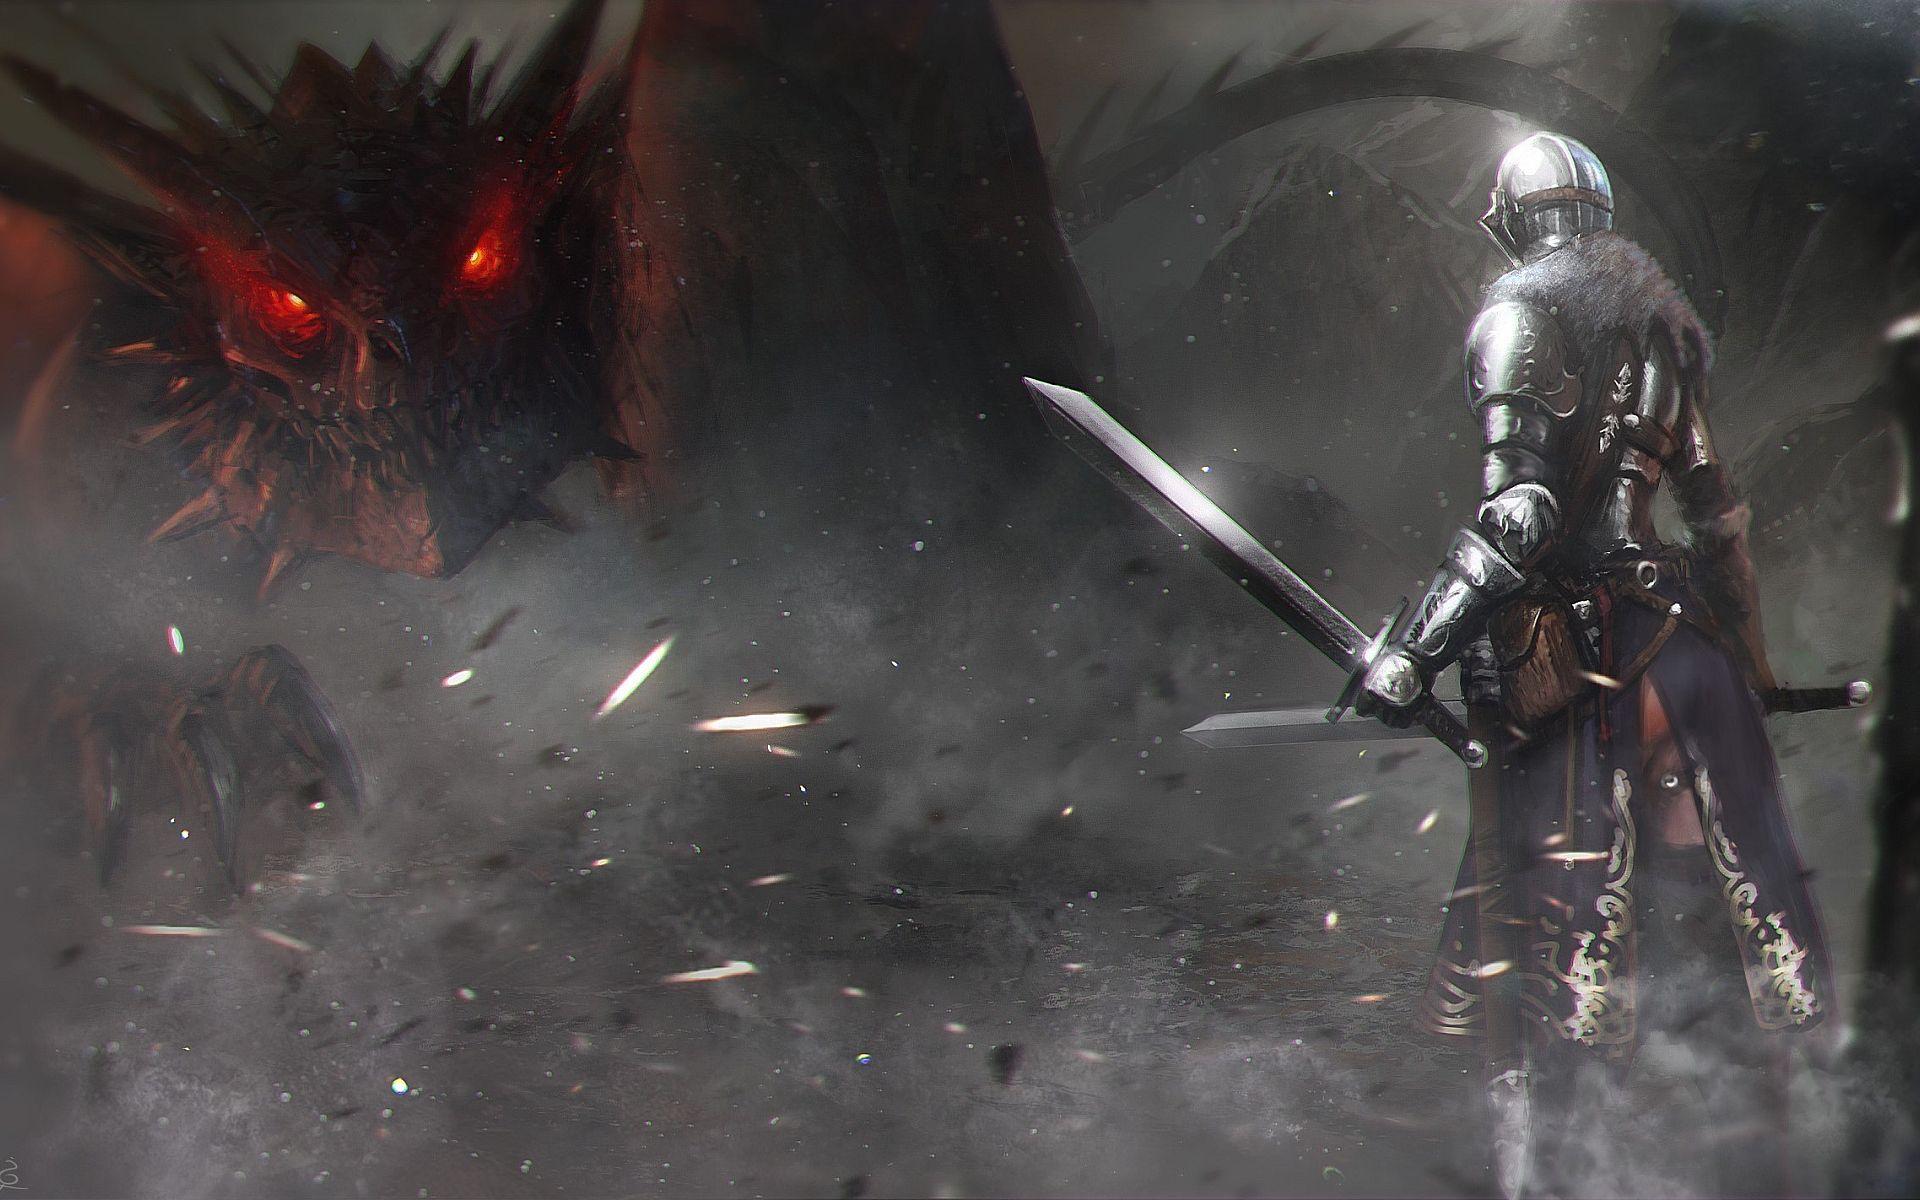 Knight vs dragon